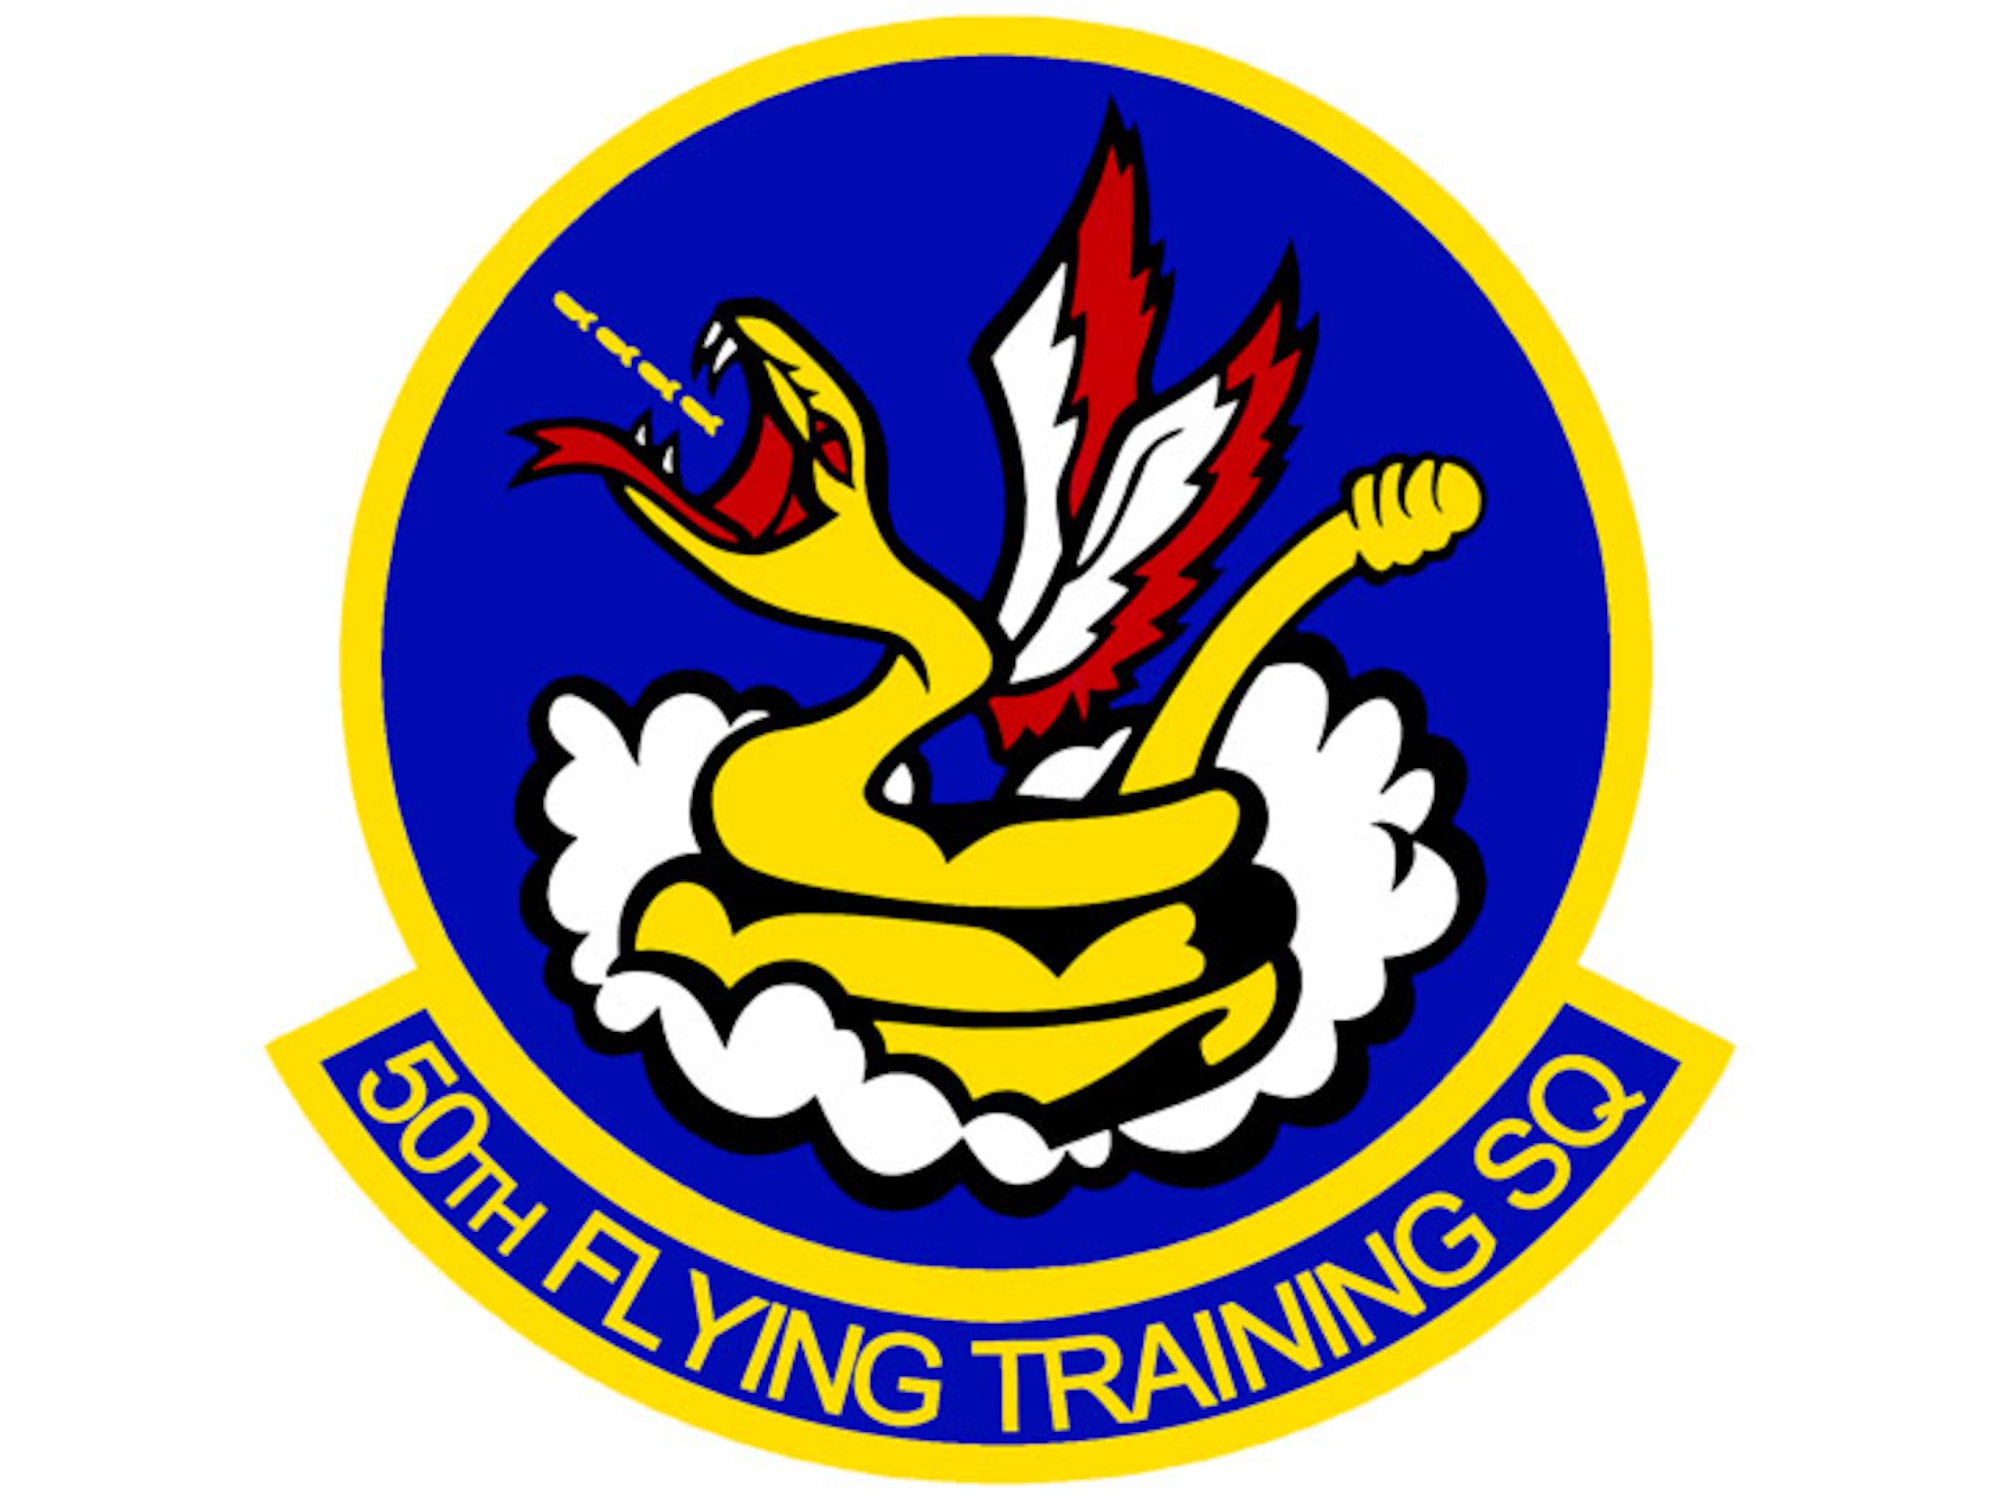 50th Flying Training Squadron